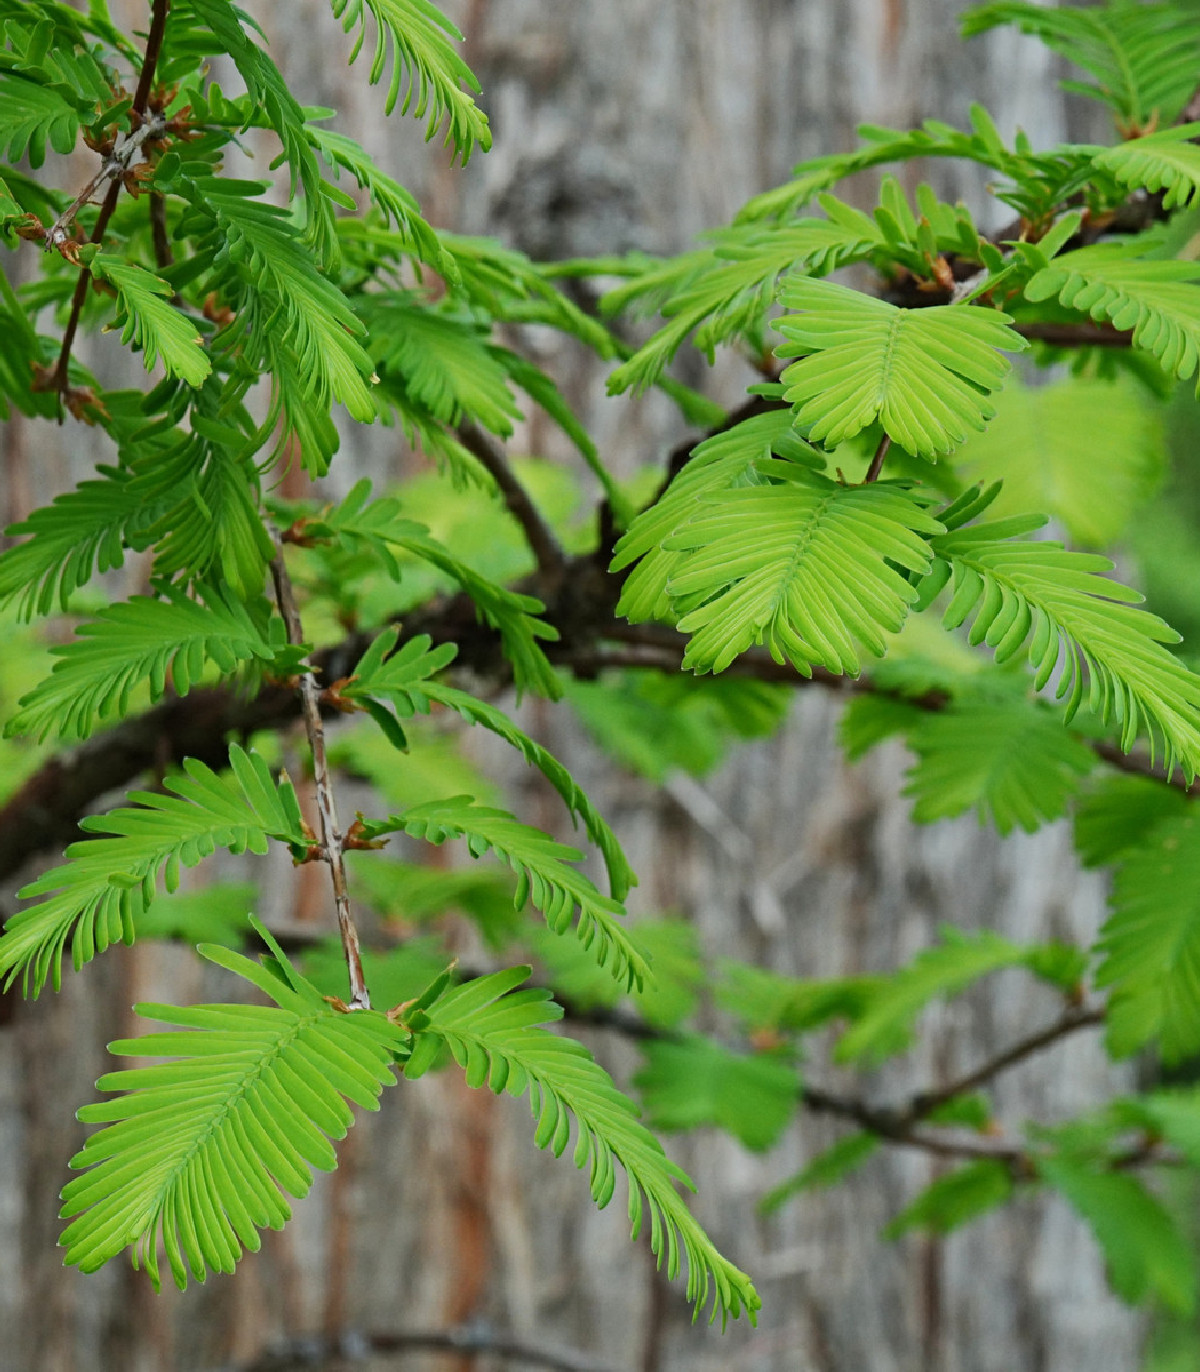 Metasekvoja čínska - Metasequoia glyptostroboides - semená - 10 ks